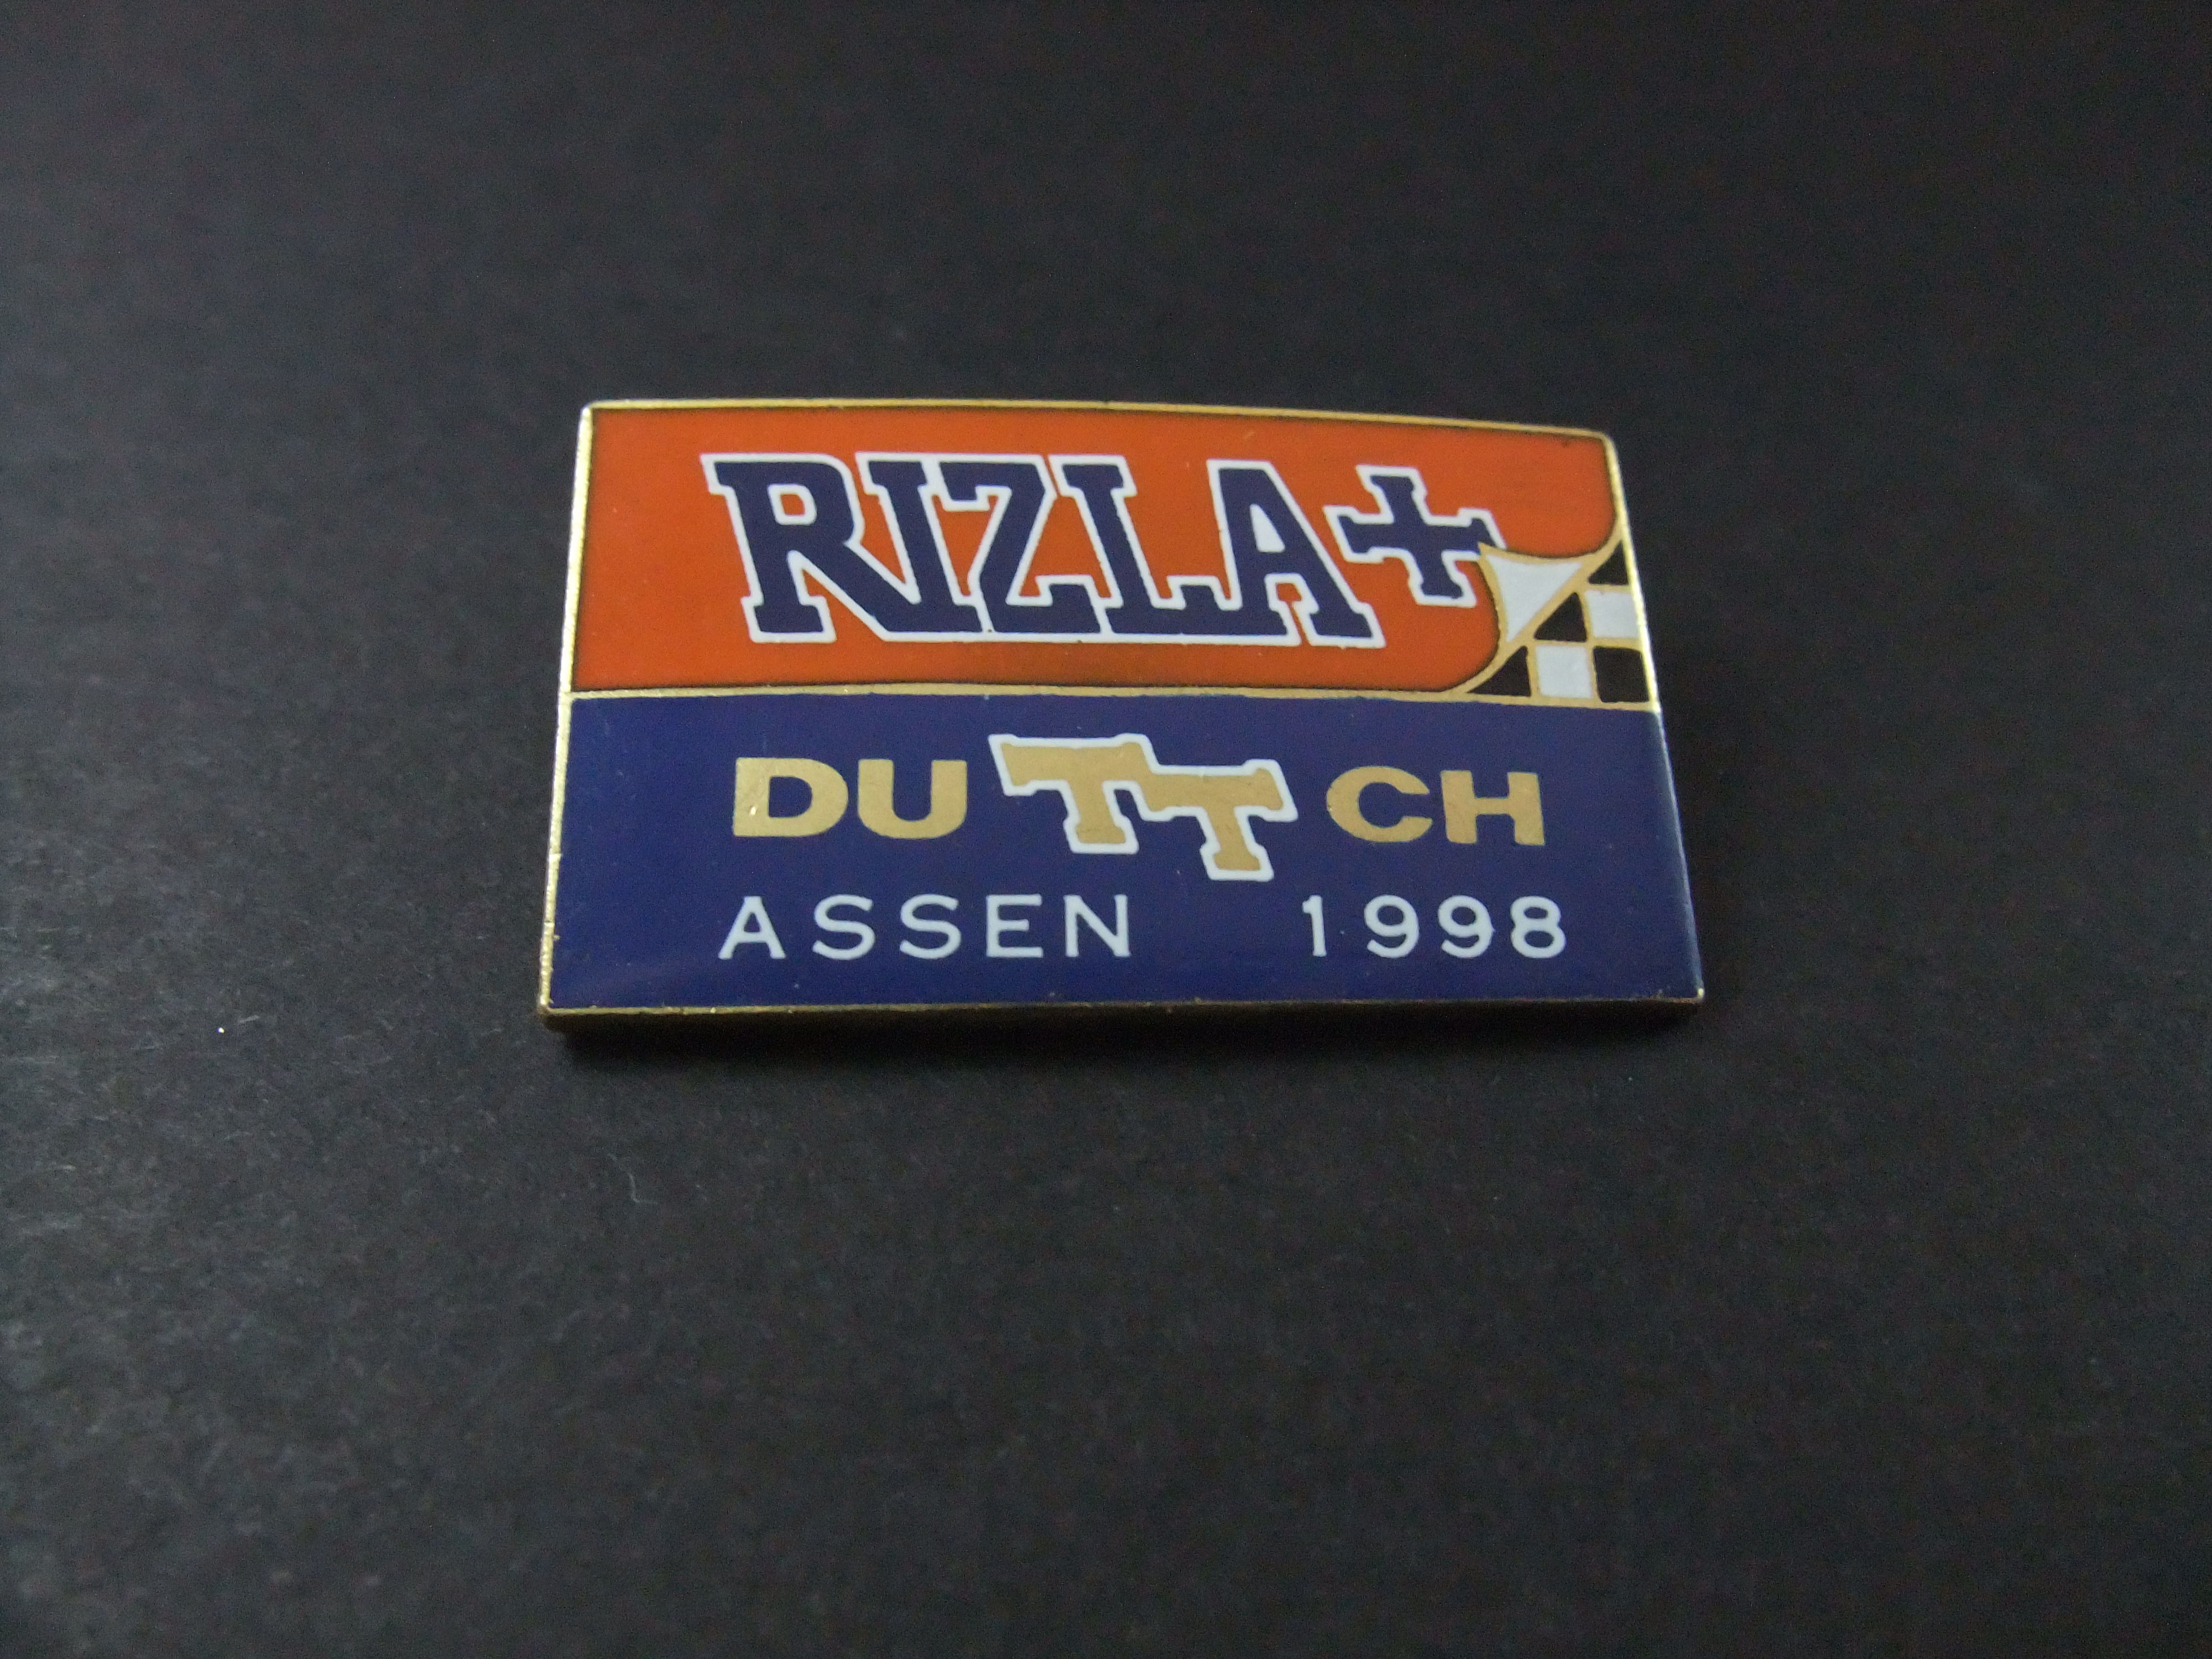 Du(TT)ch Assen motorsport evenement, sponsor Rizla 1998